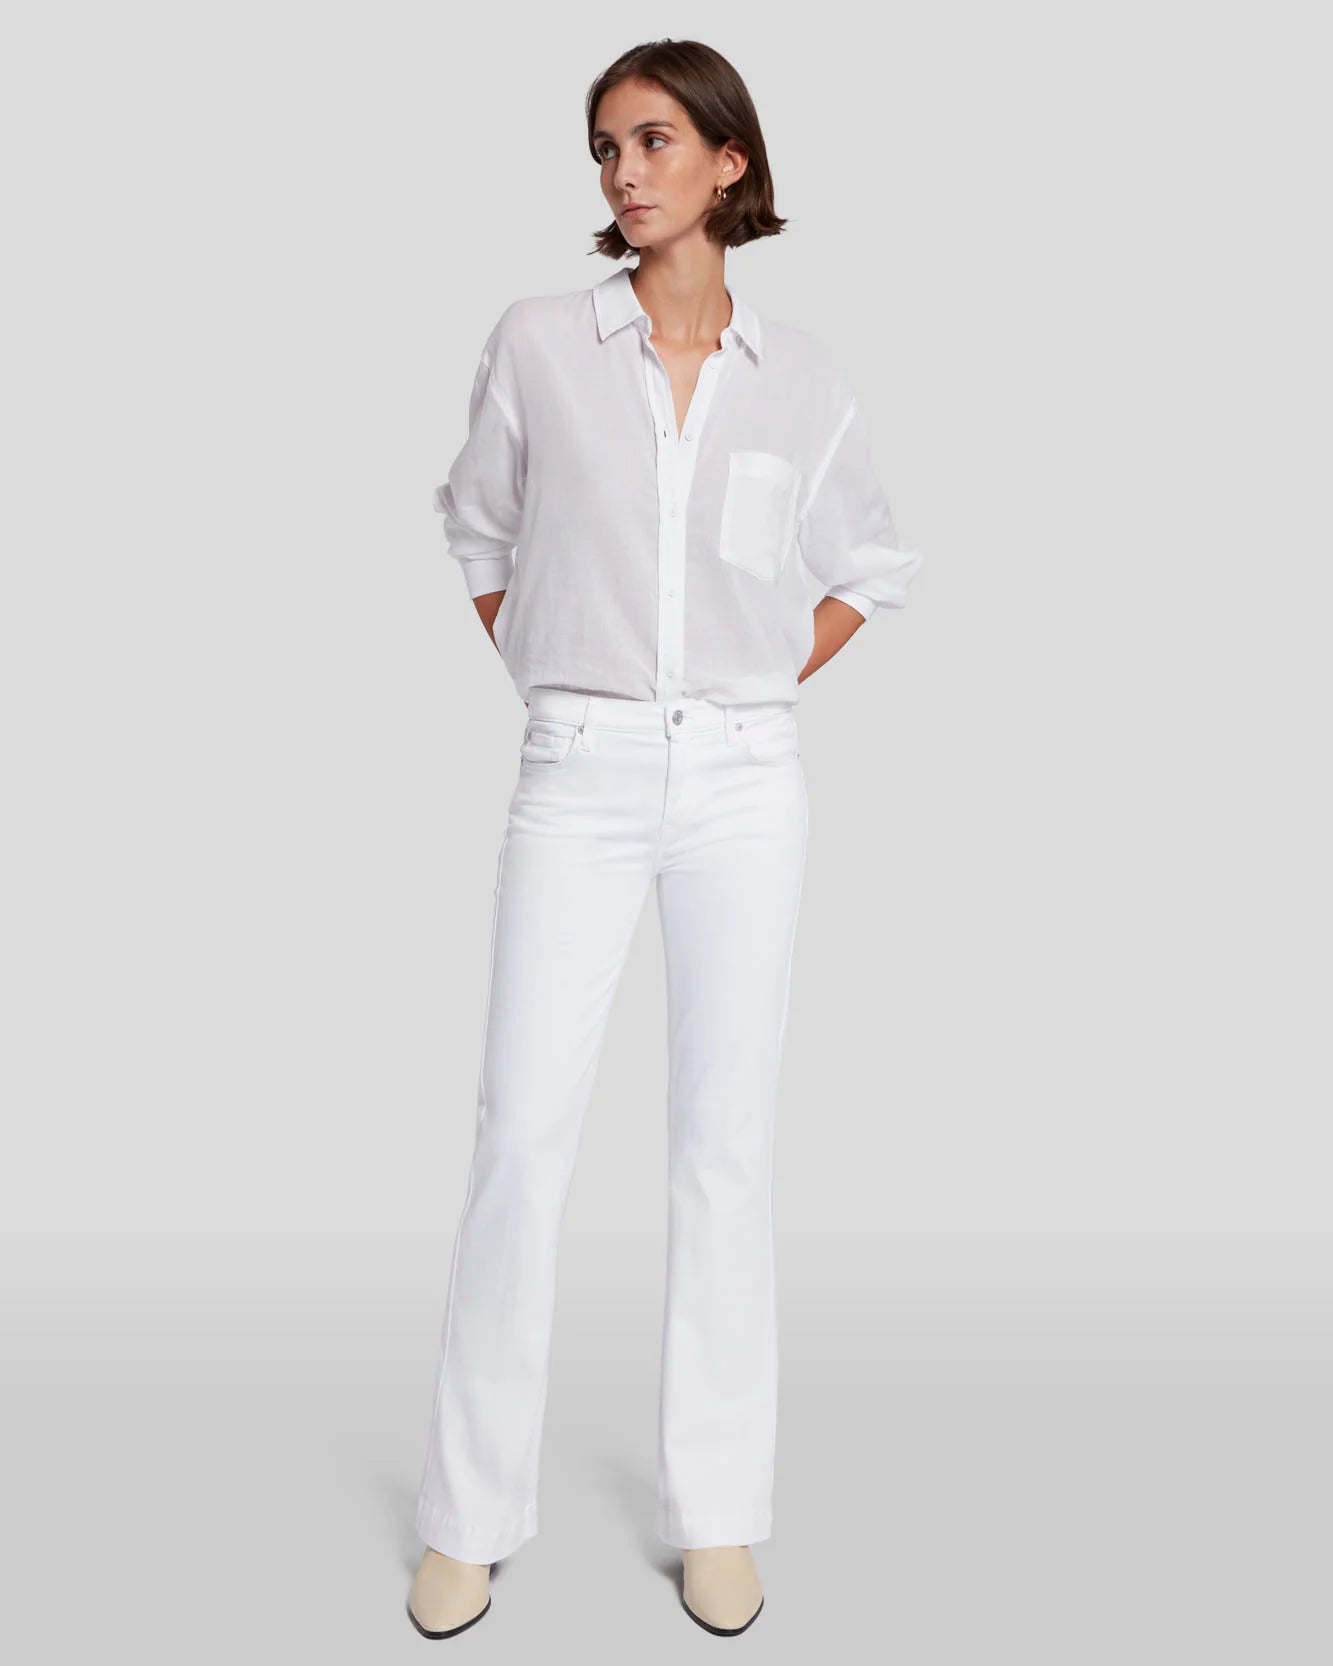 Dojo Tailorless - Luxe White